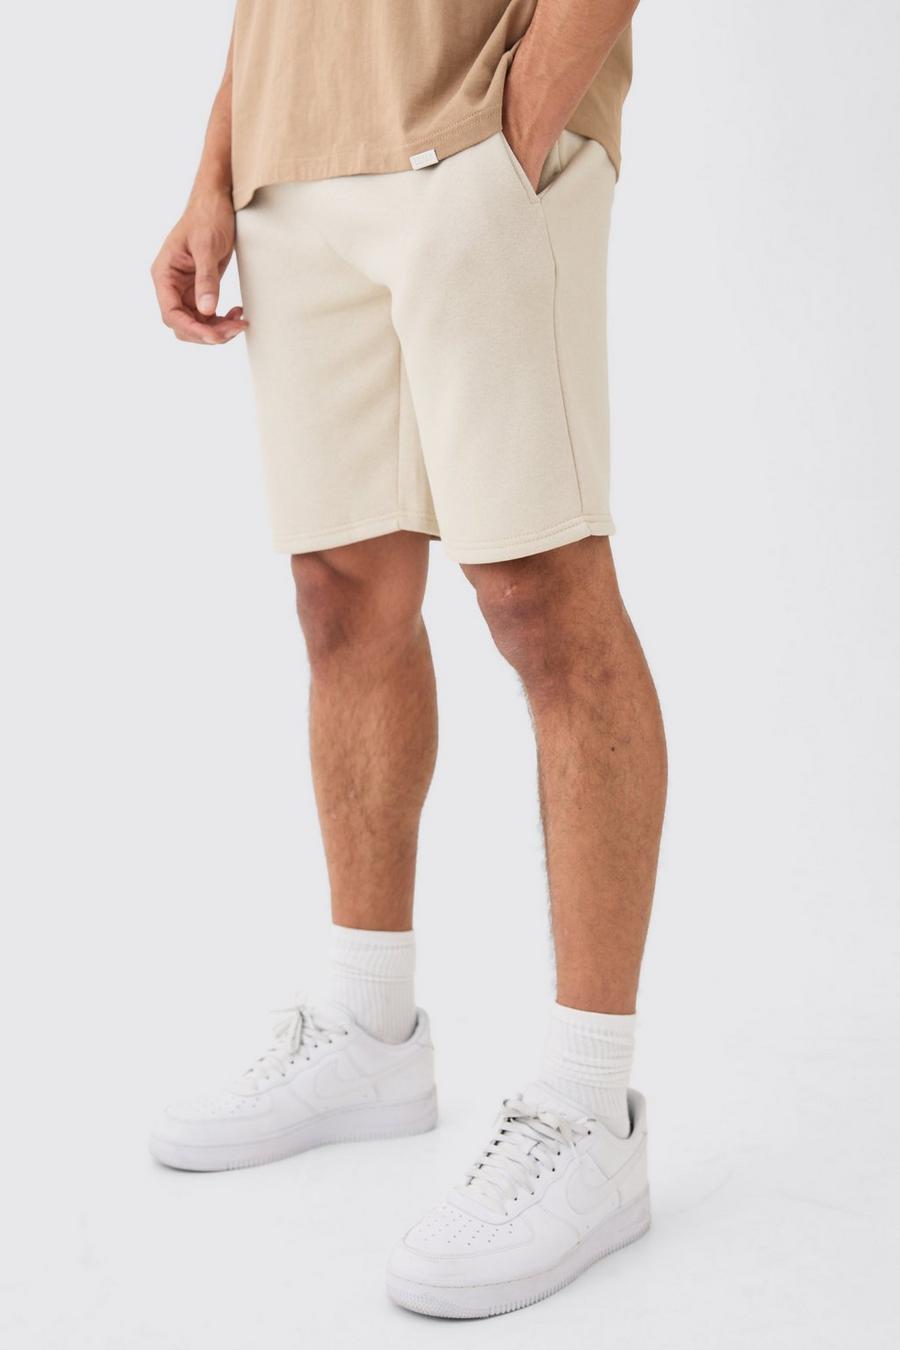 Stone Mellanlånga shorts med ledig passform